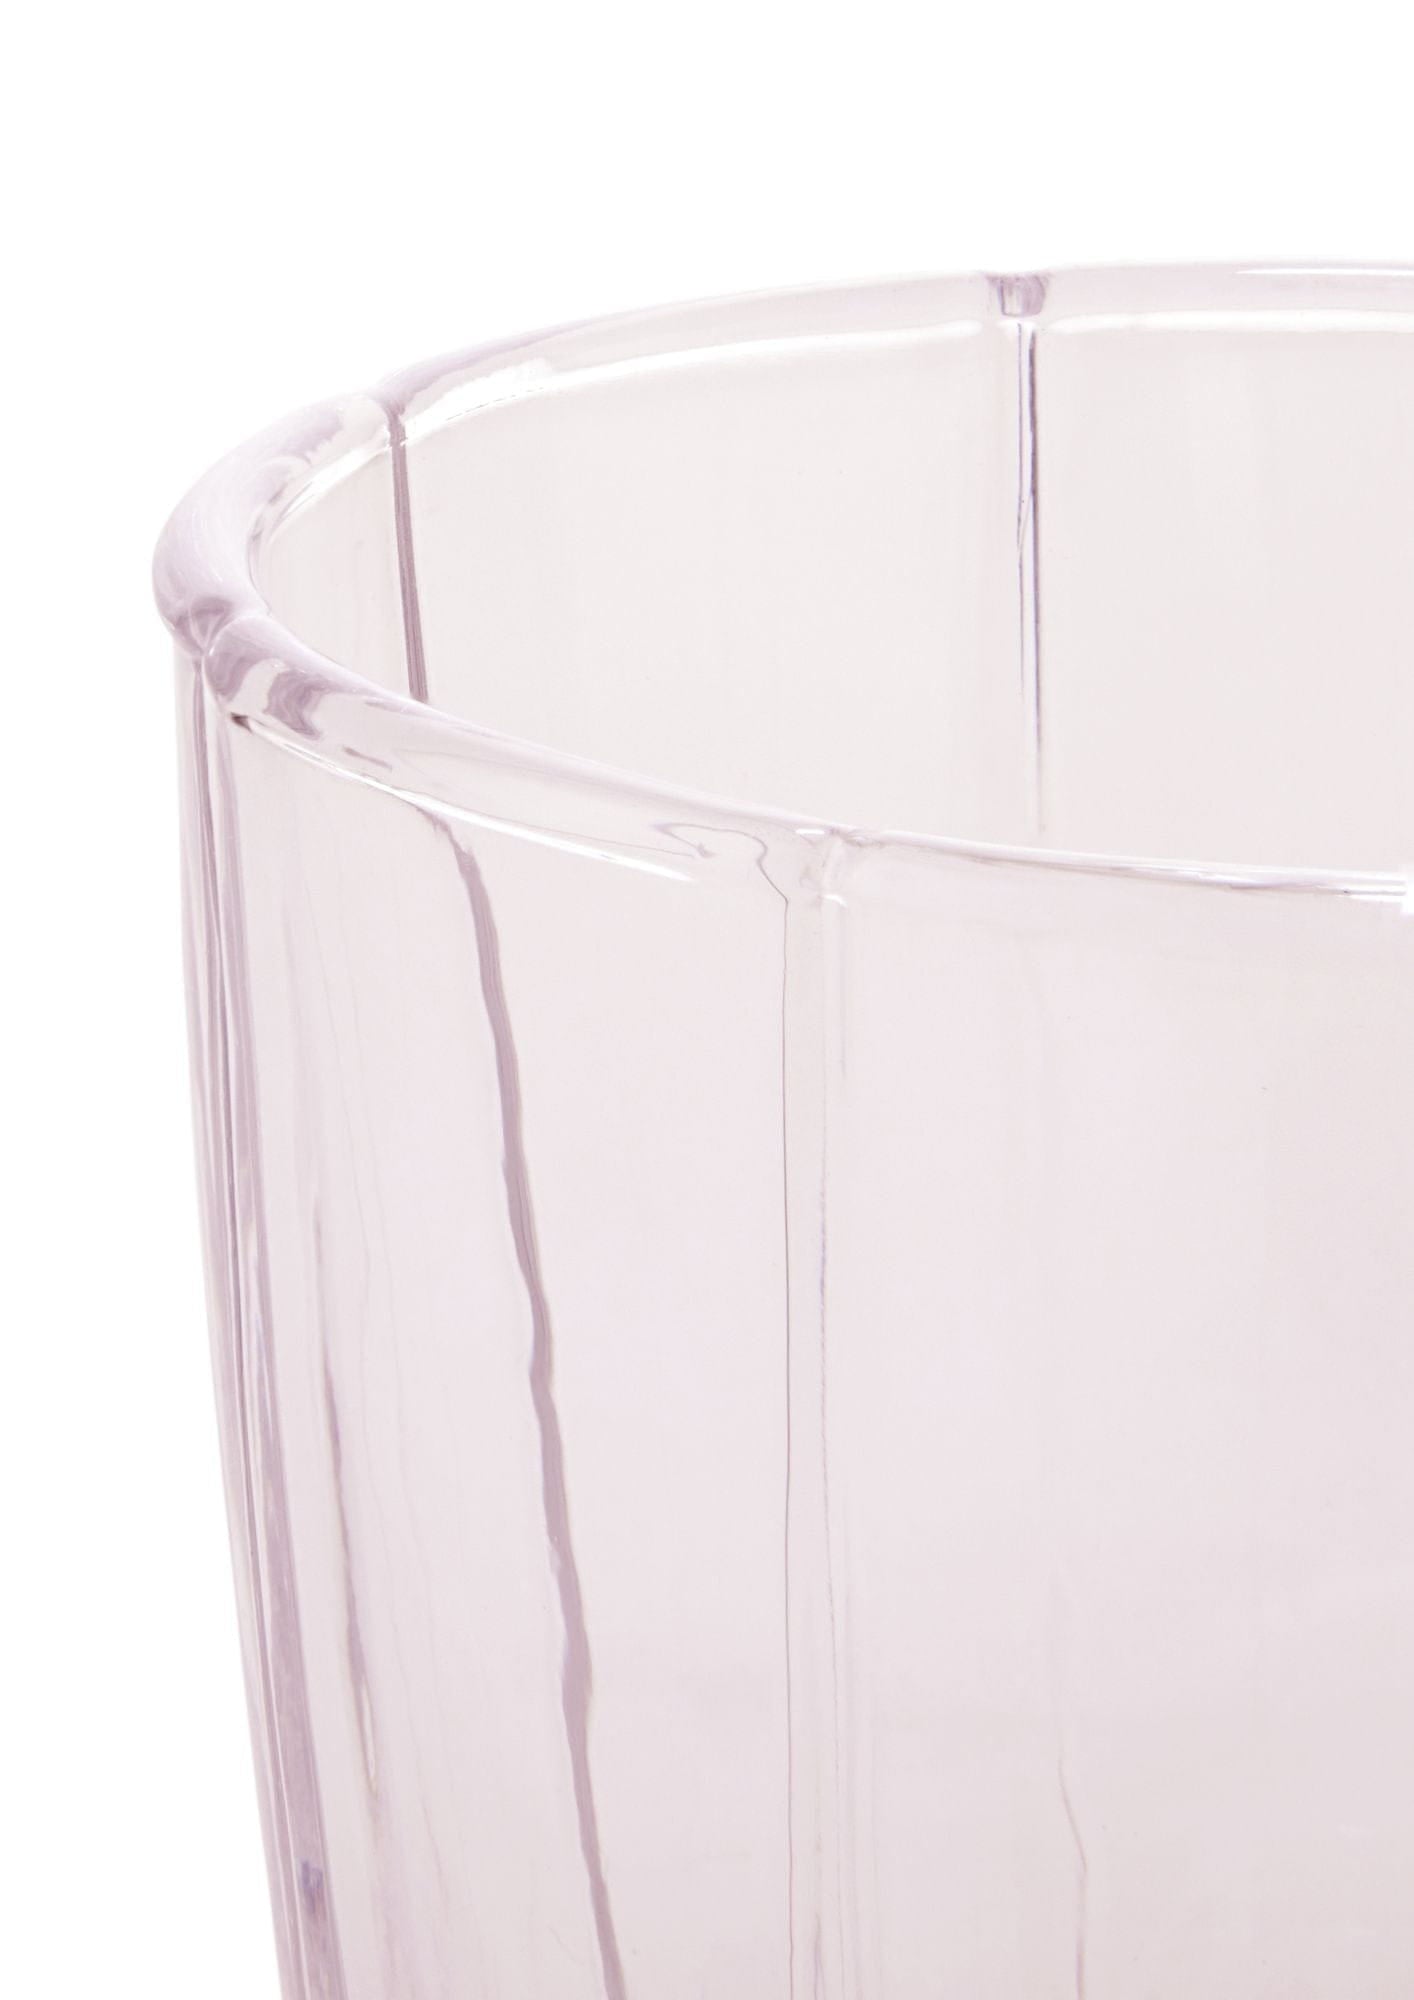 Holmegaard Lily Water Glass Set av 2 320 ml, rosa